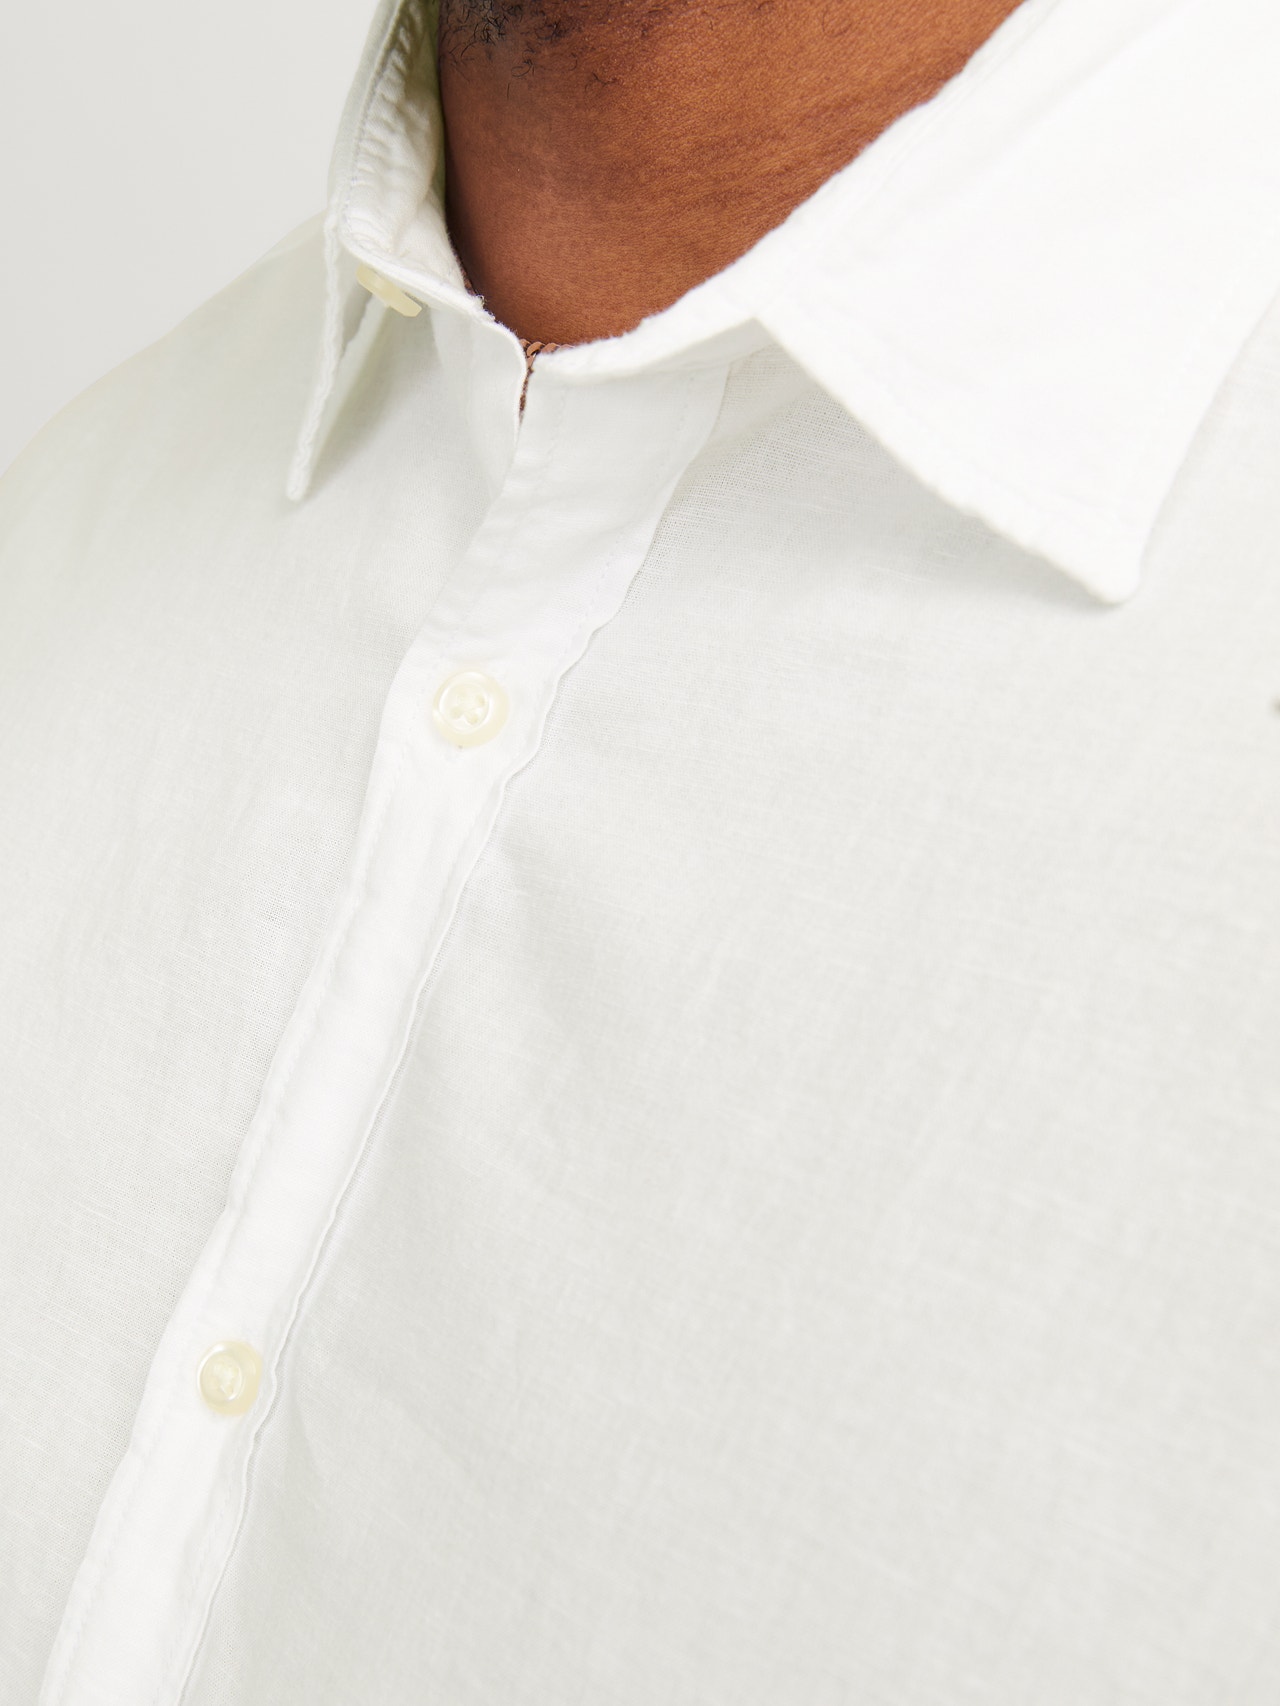 Jack & Jones Plus Size Camisa Slim Fit -White - 12253720